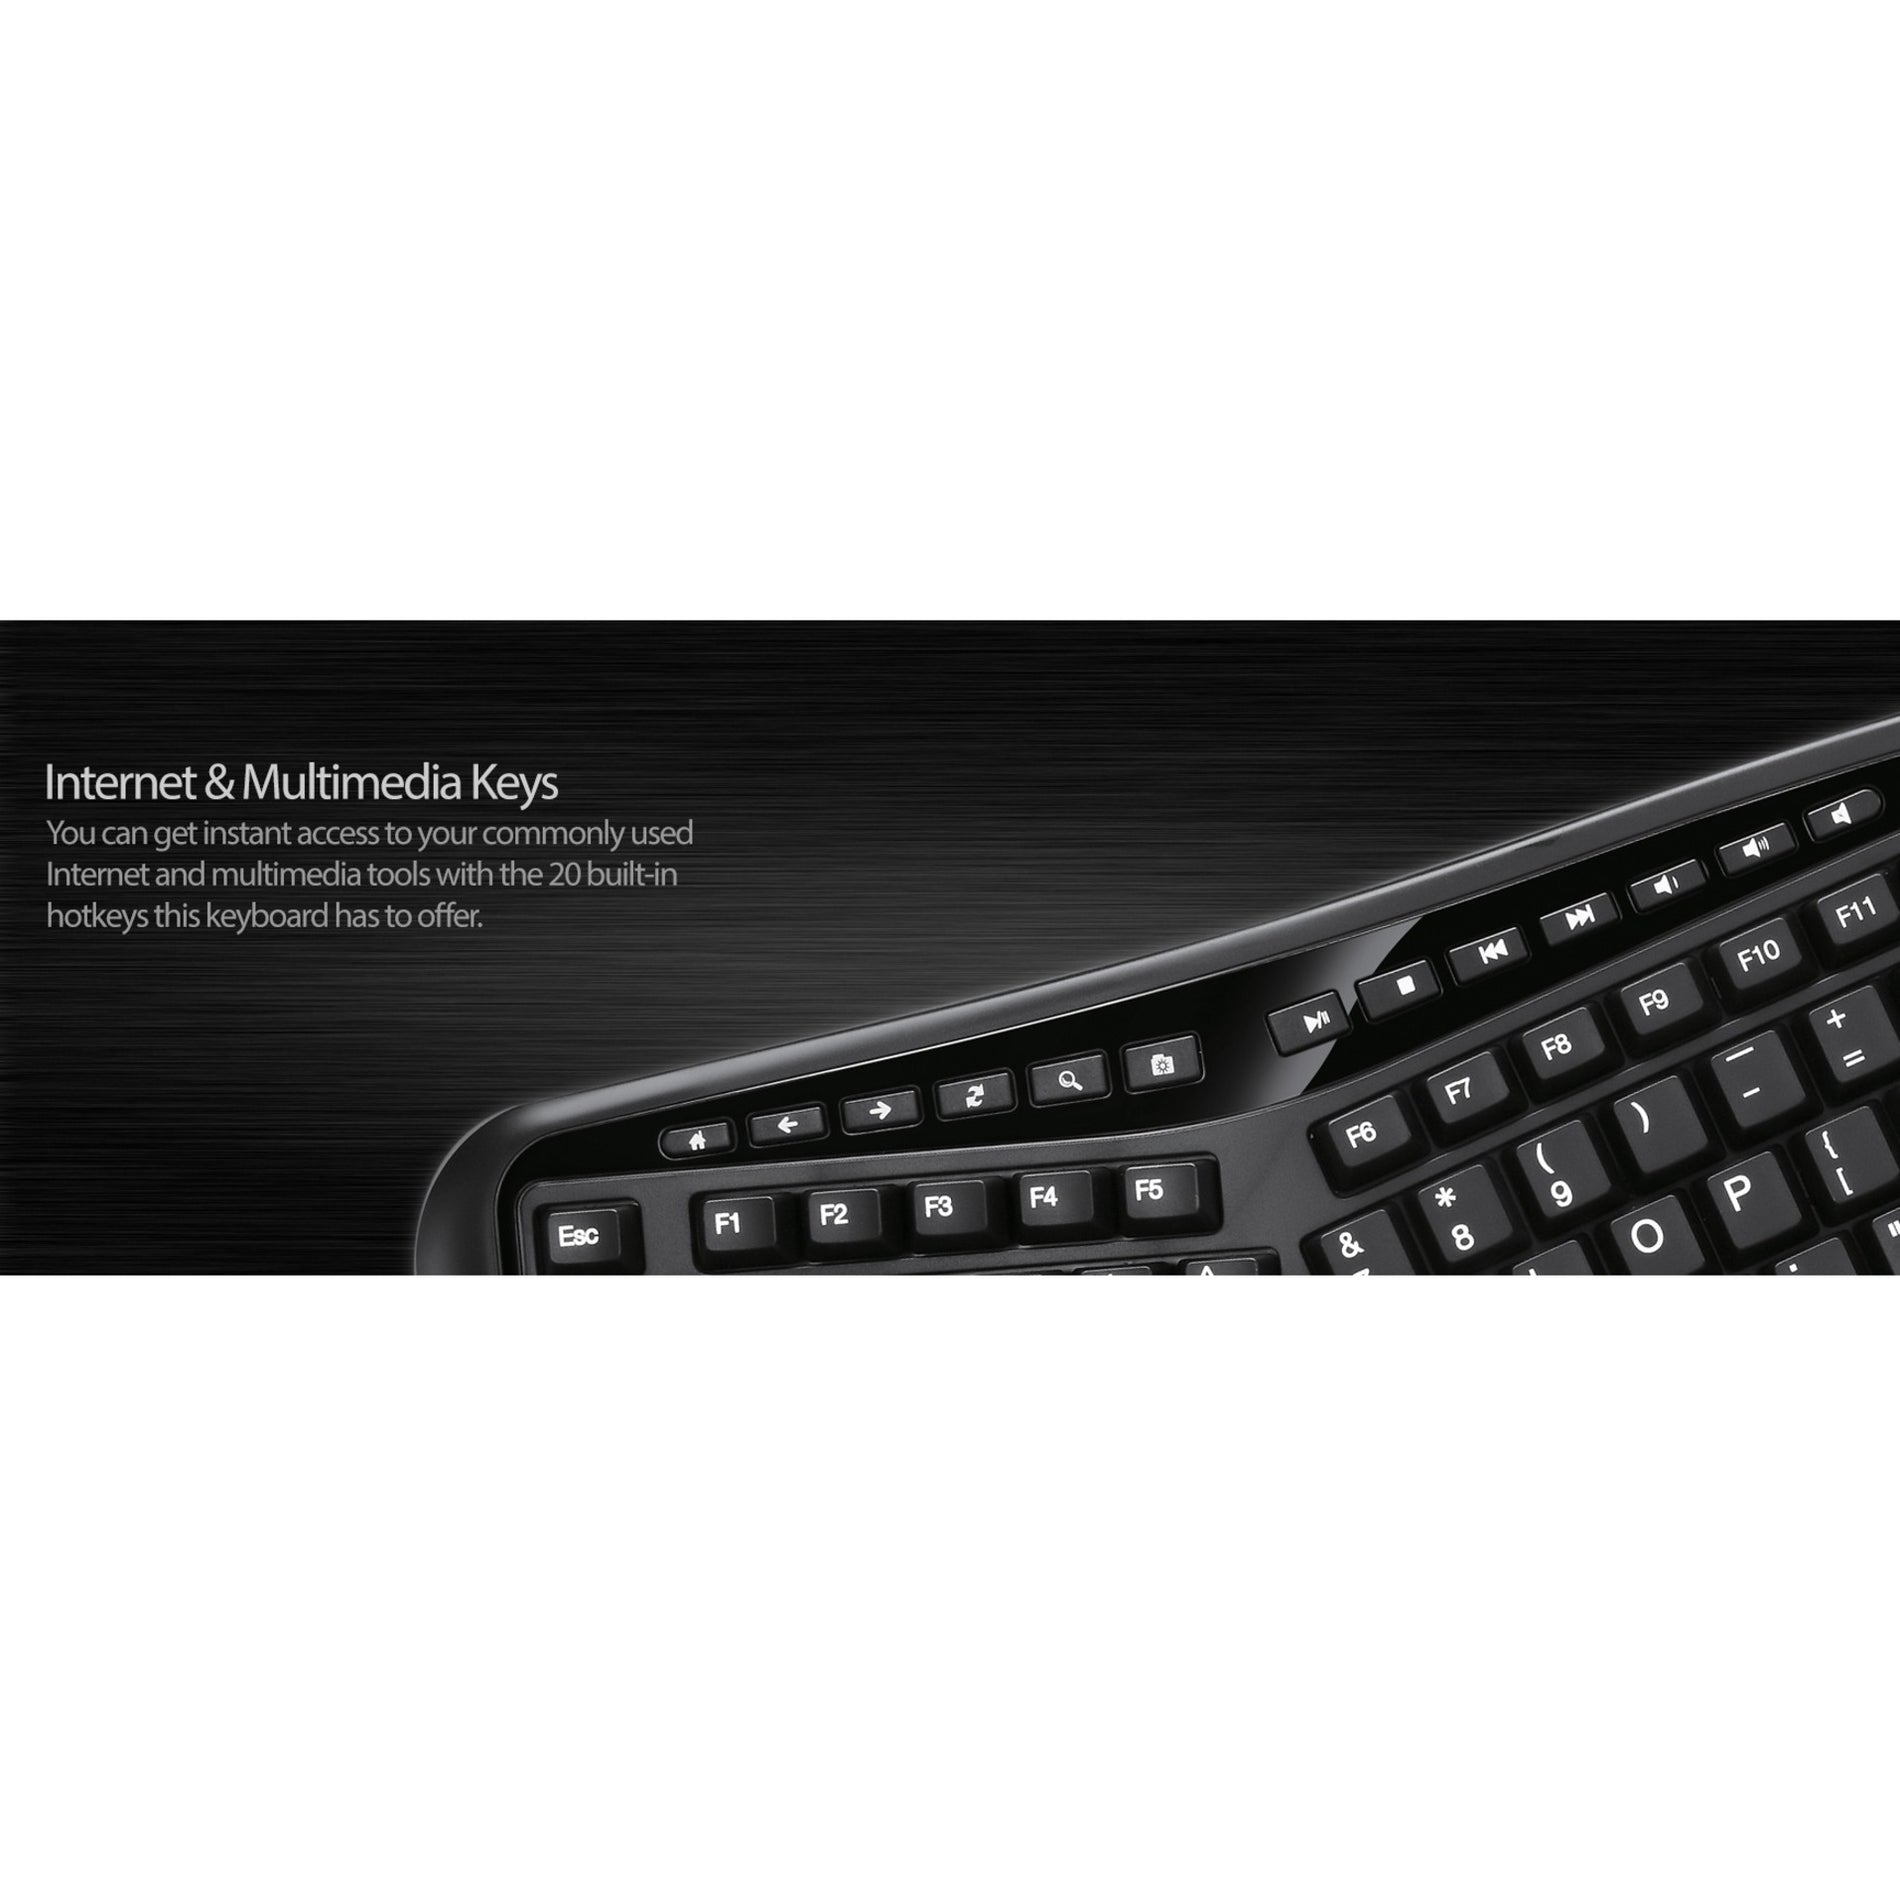 Adesso AKB-150UB-TAA Desktop Ergonomic Keyboard, Split Layout, USB Cable, 105 Keys, Black